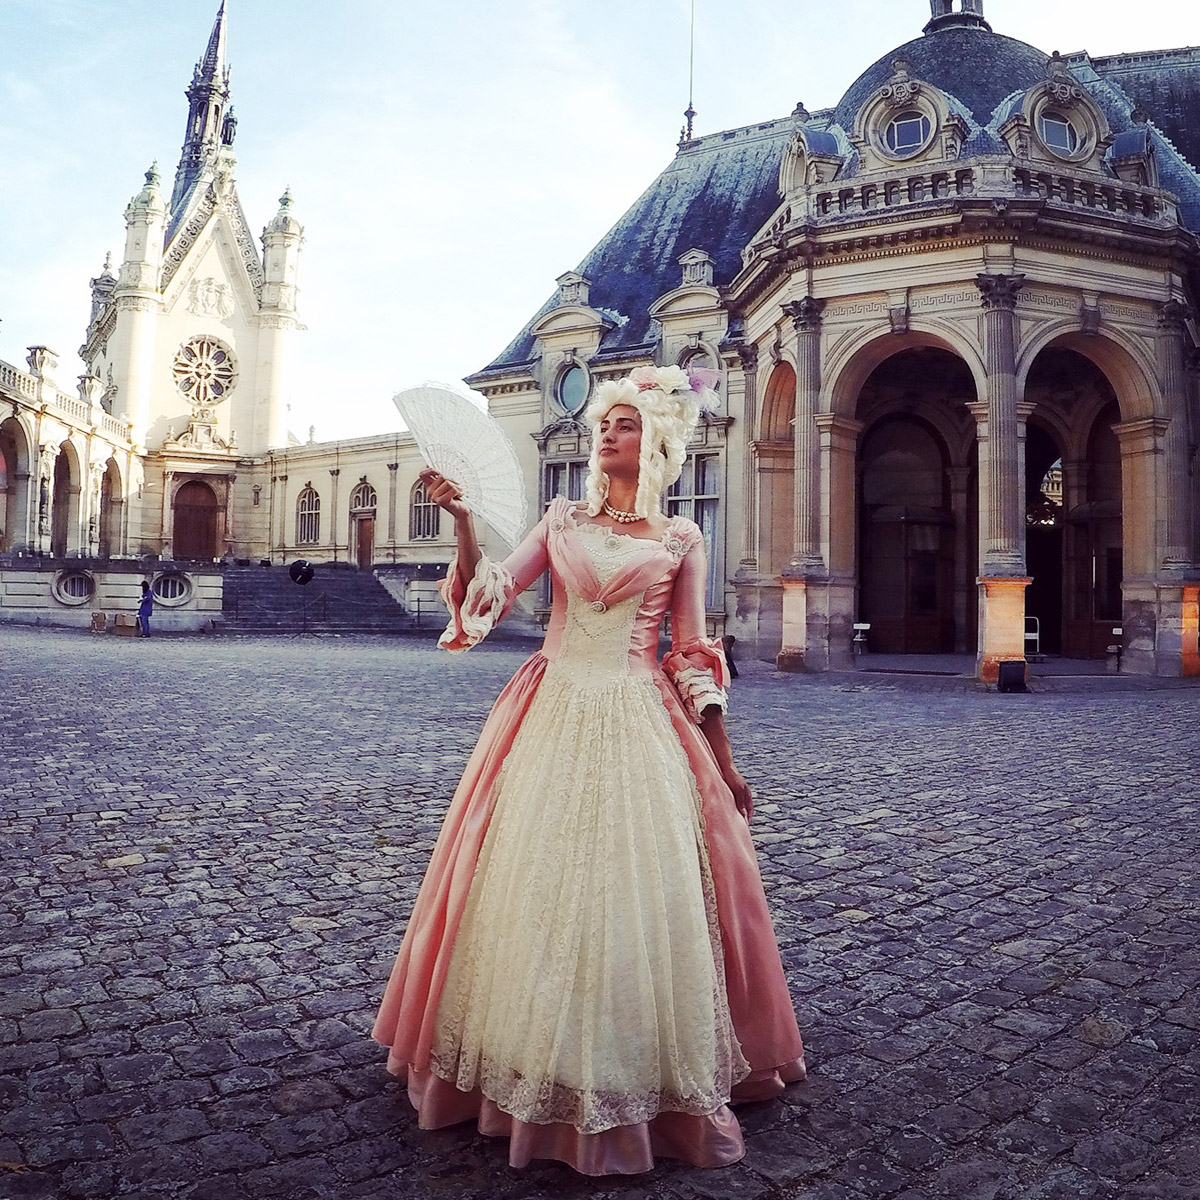 Accueil hotesse costume d'époque Marie-Antoinette